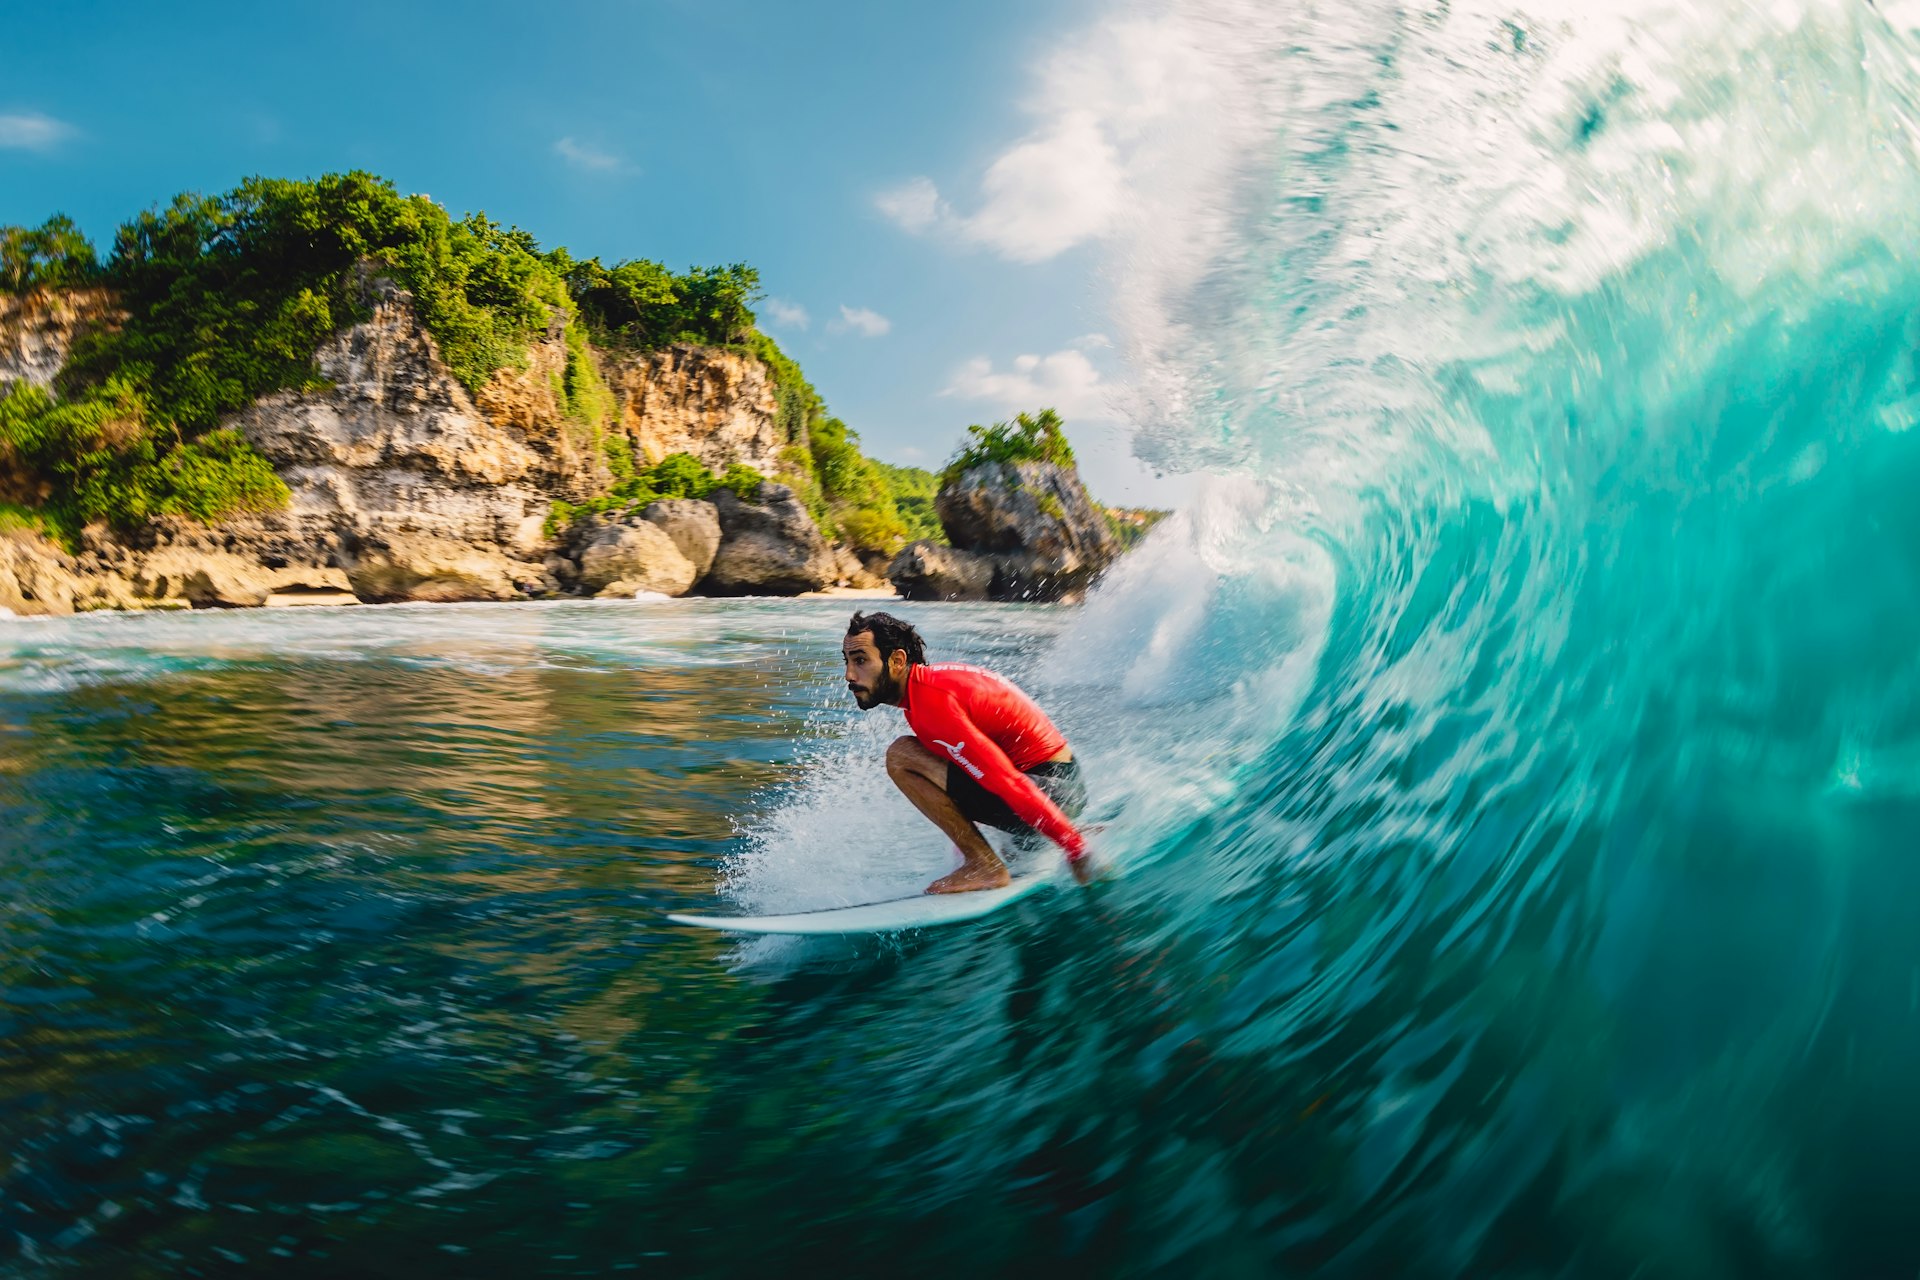 Surfer ride in a barrel wave. Bali, Indonesia